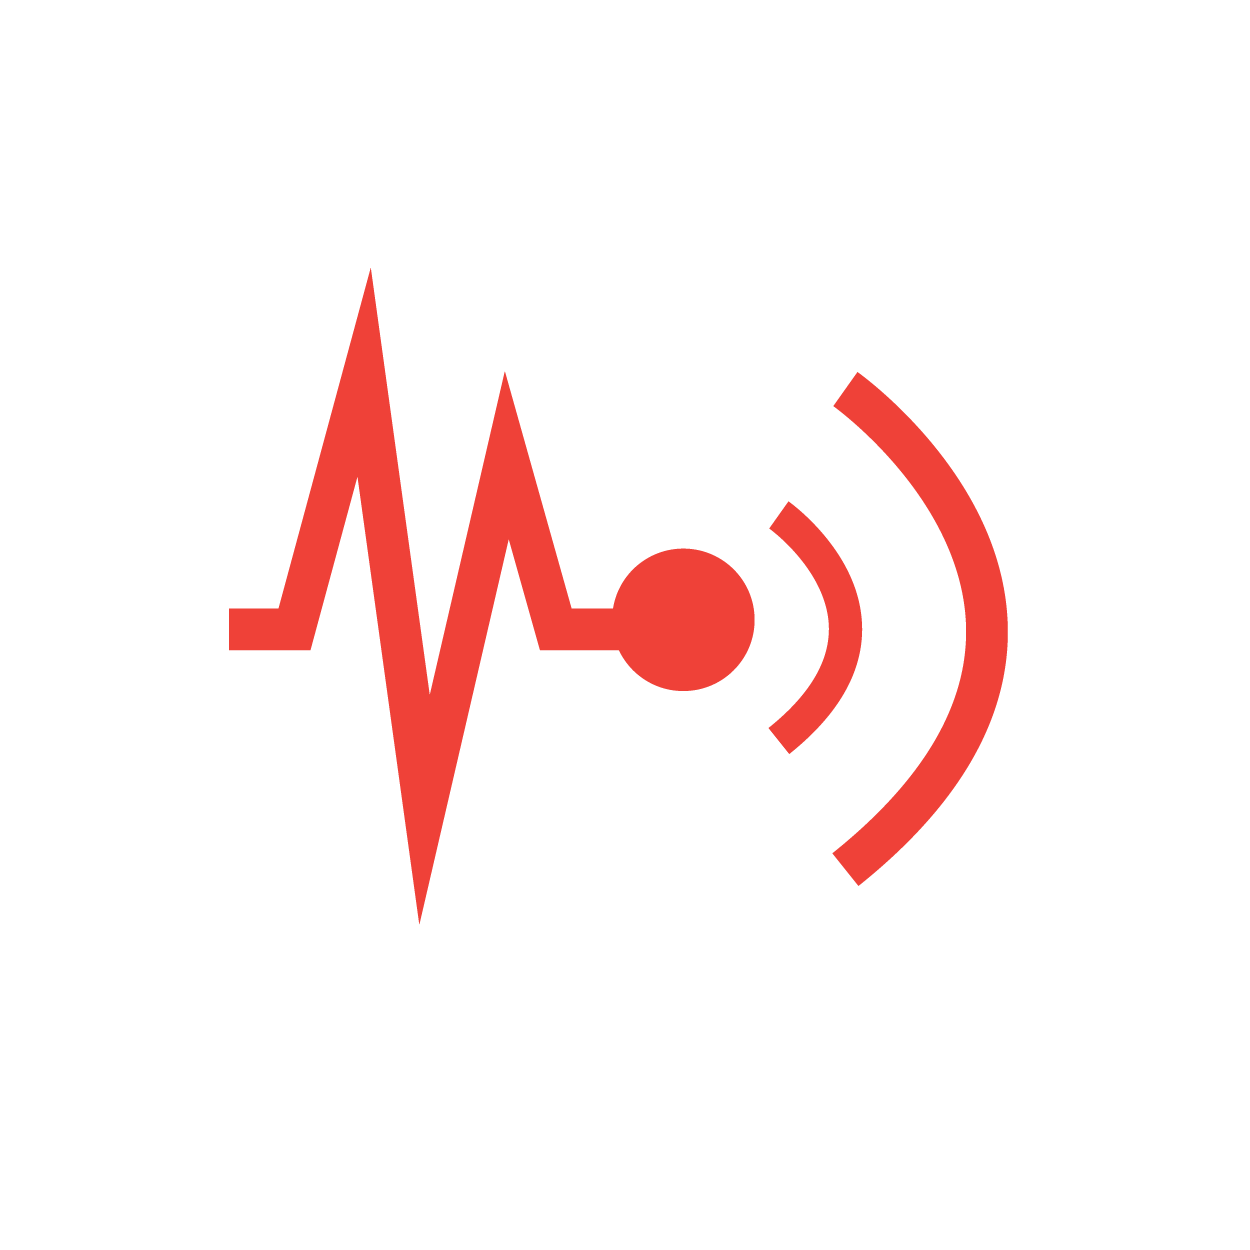 Monitoreo integrado - Logotipo de diseño rojo de rIM